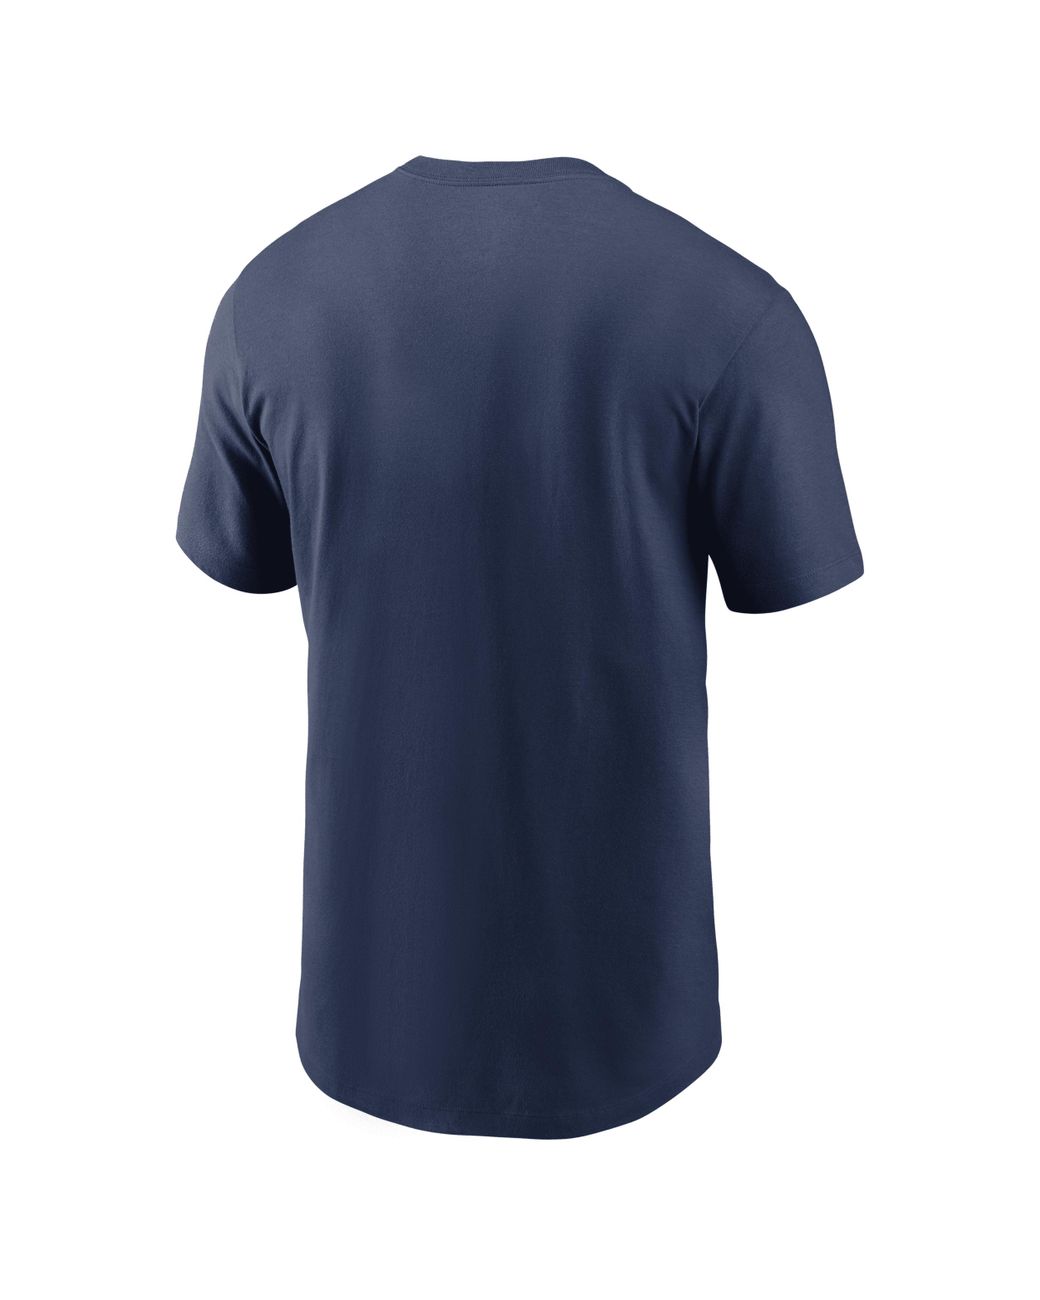 Nike City Connect Wordmark (MLB Kansas City Royals) Men's T-Shirt